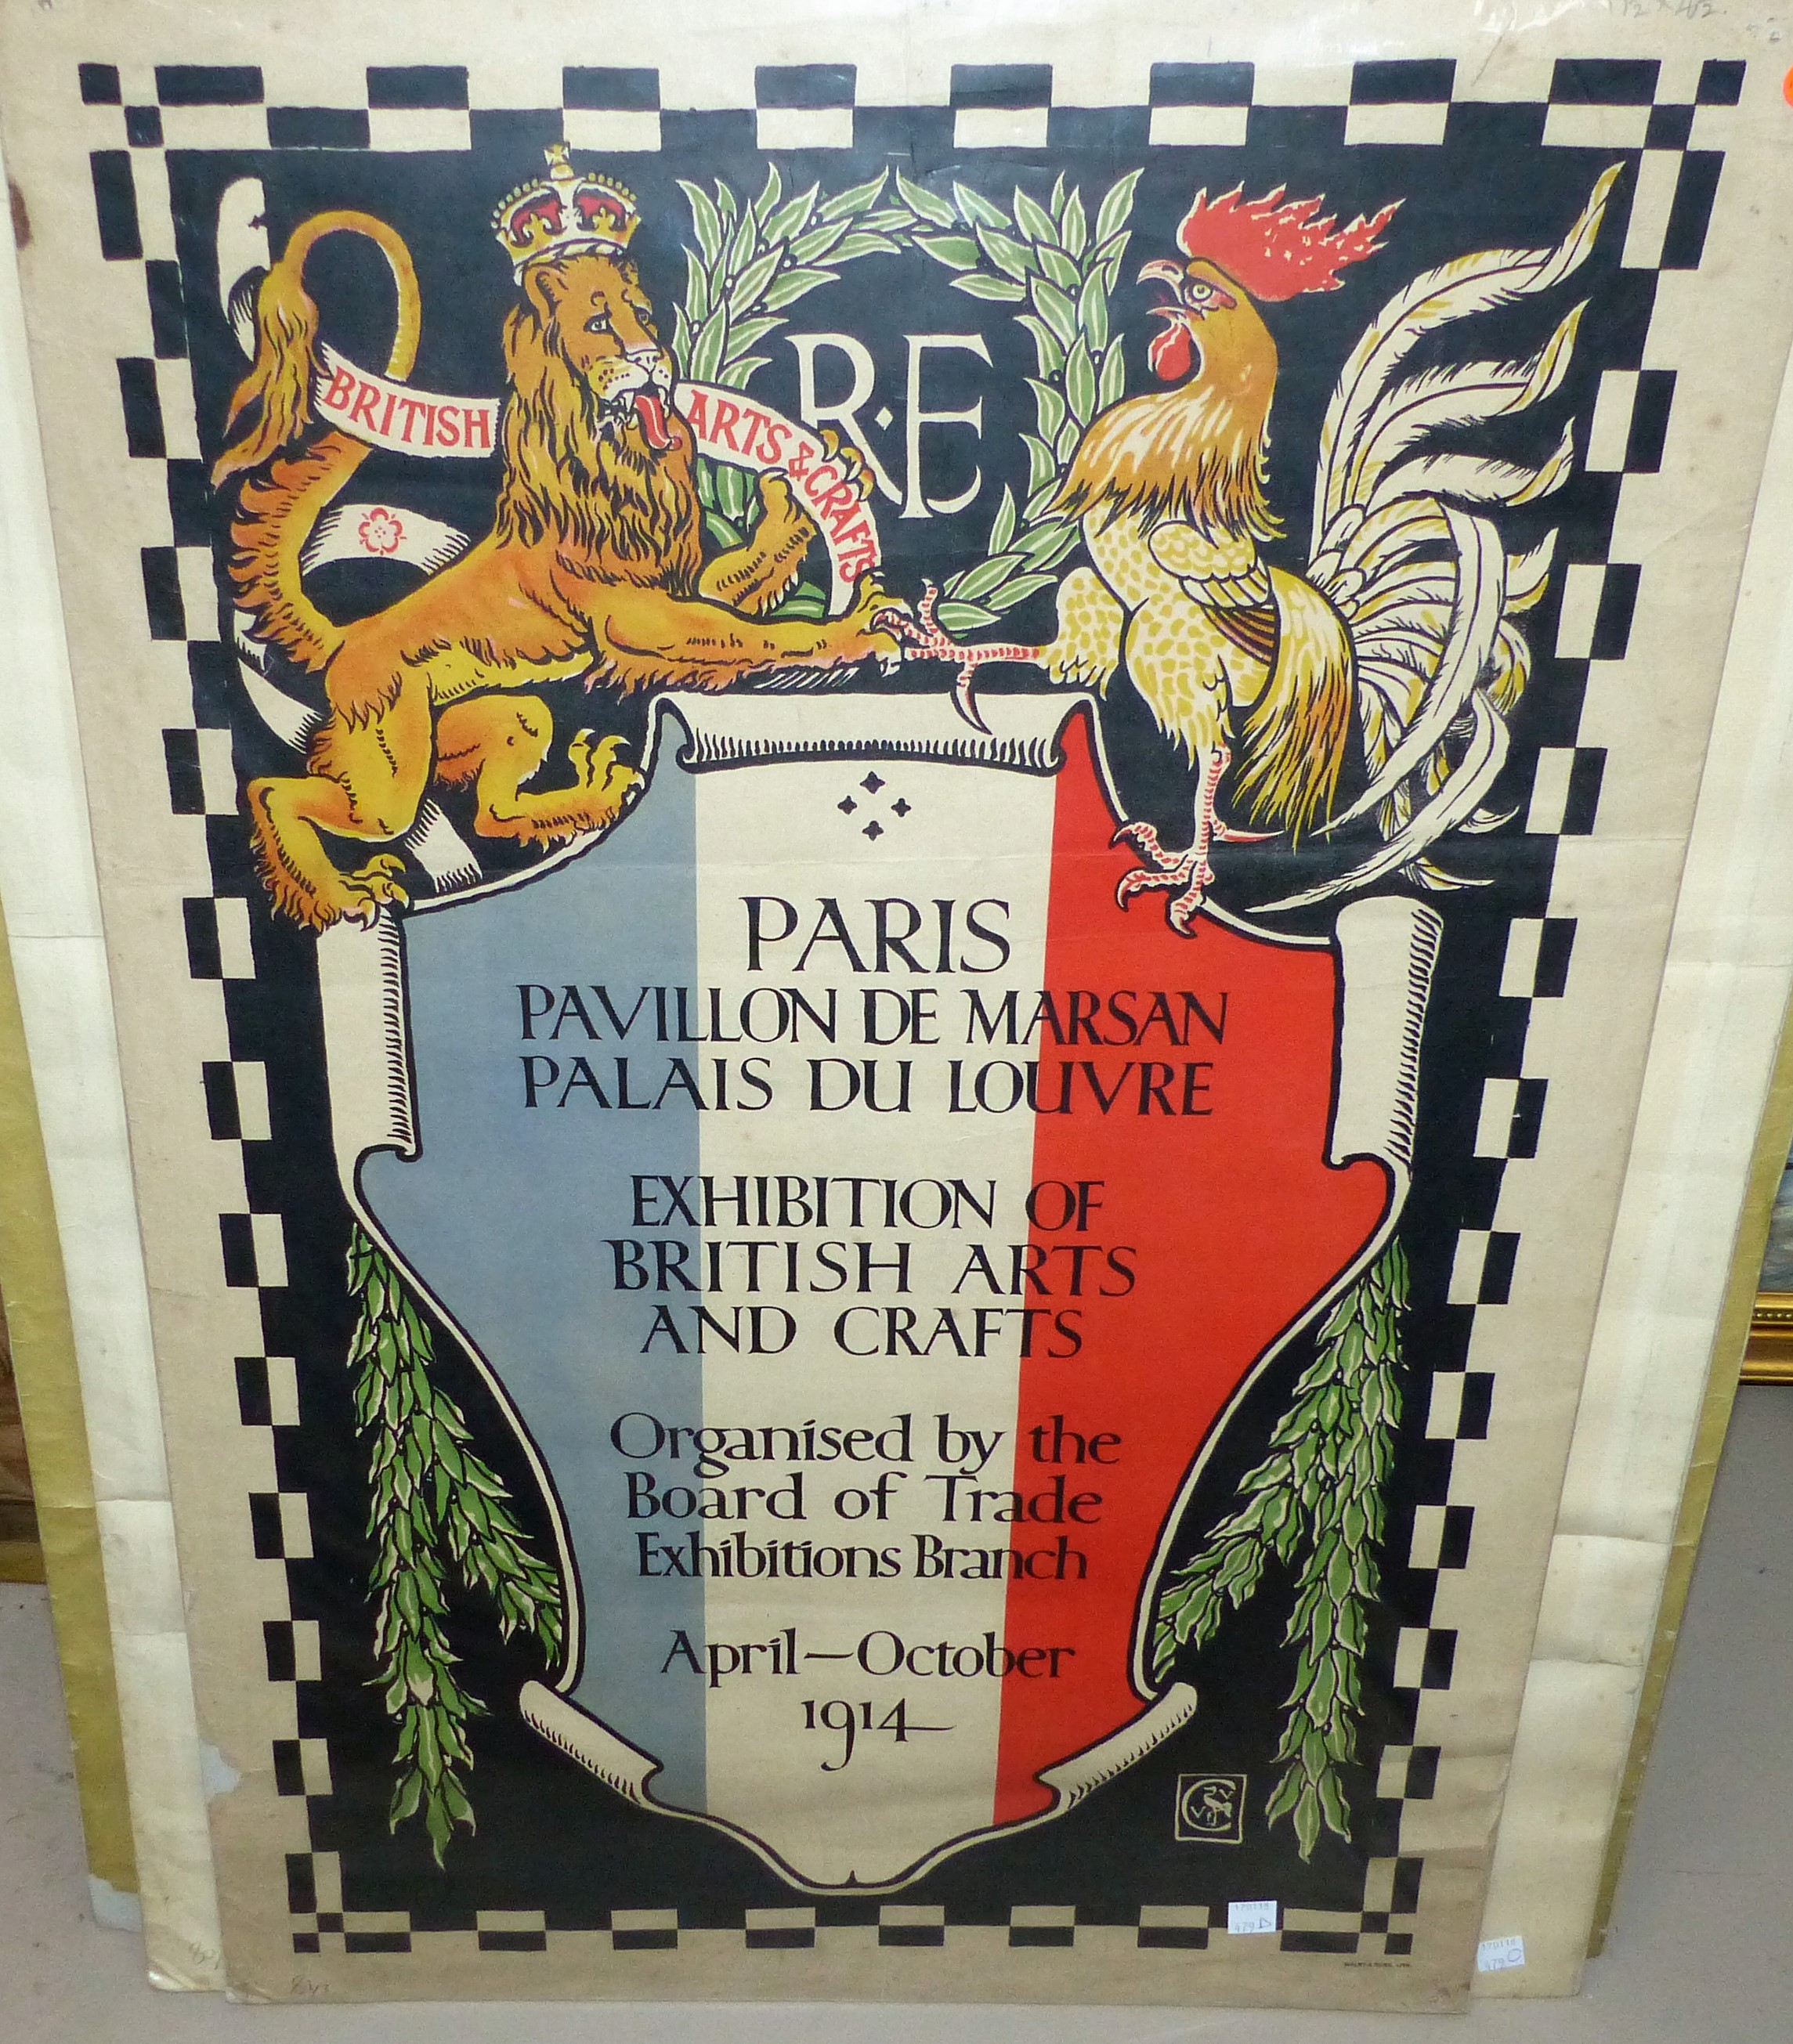 Exhibition of British Arts and Crafts, Paris, 1915, original poster designed by Walter Crane, 29"